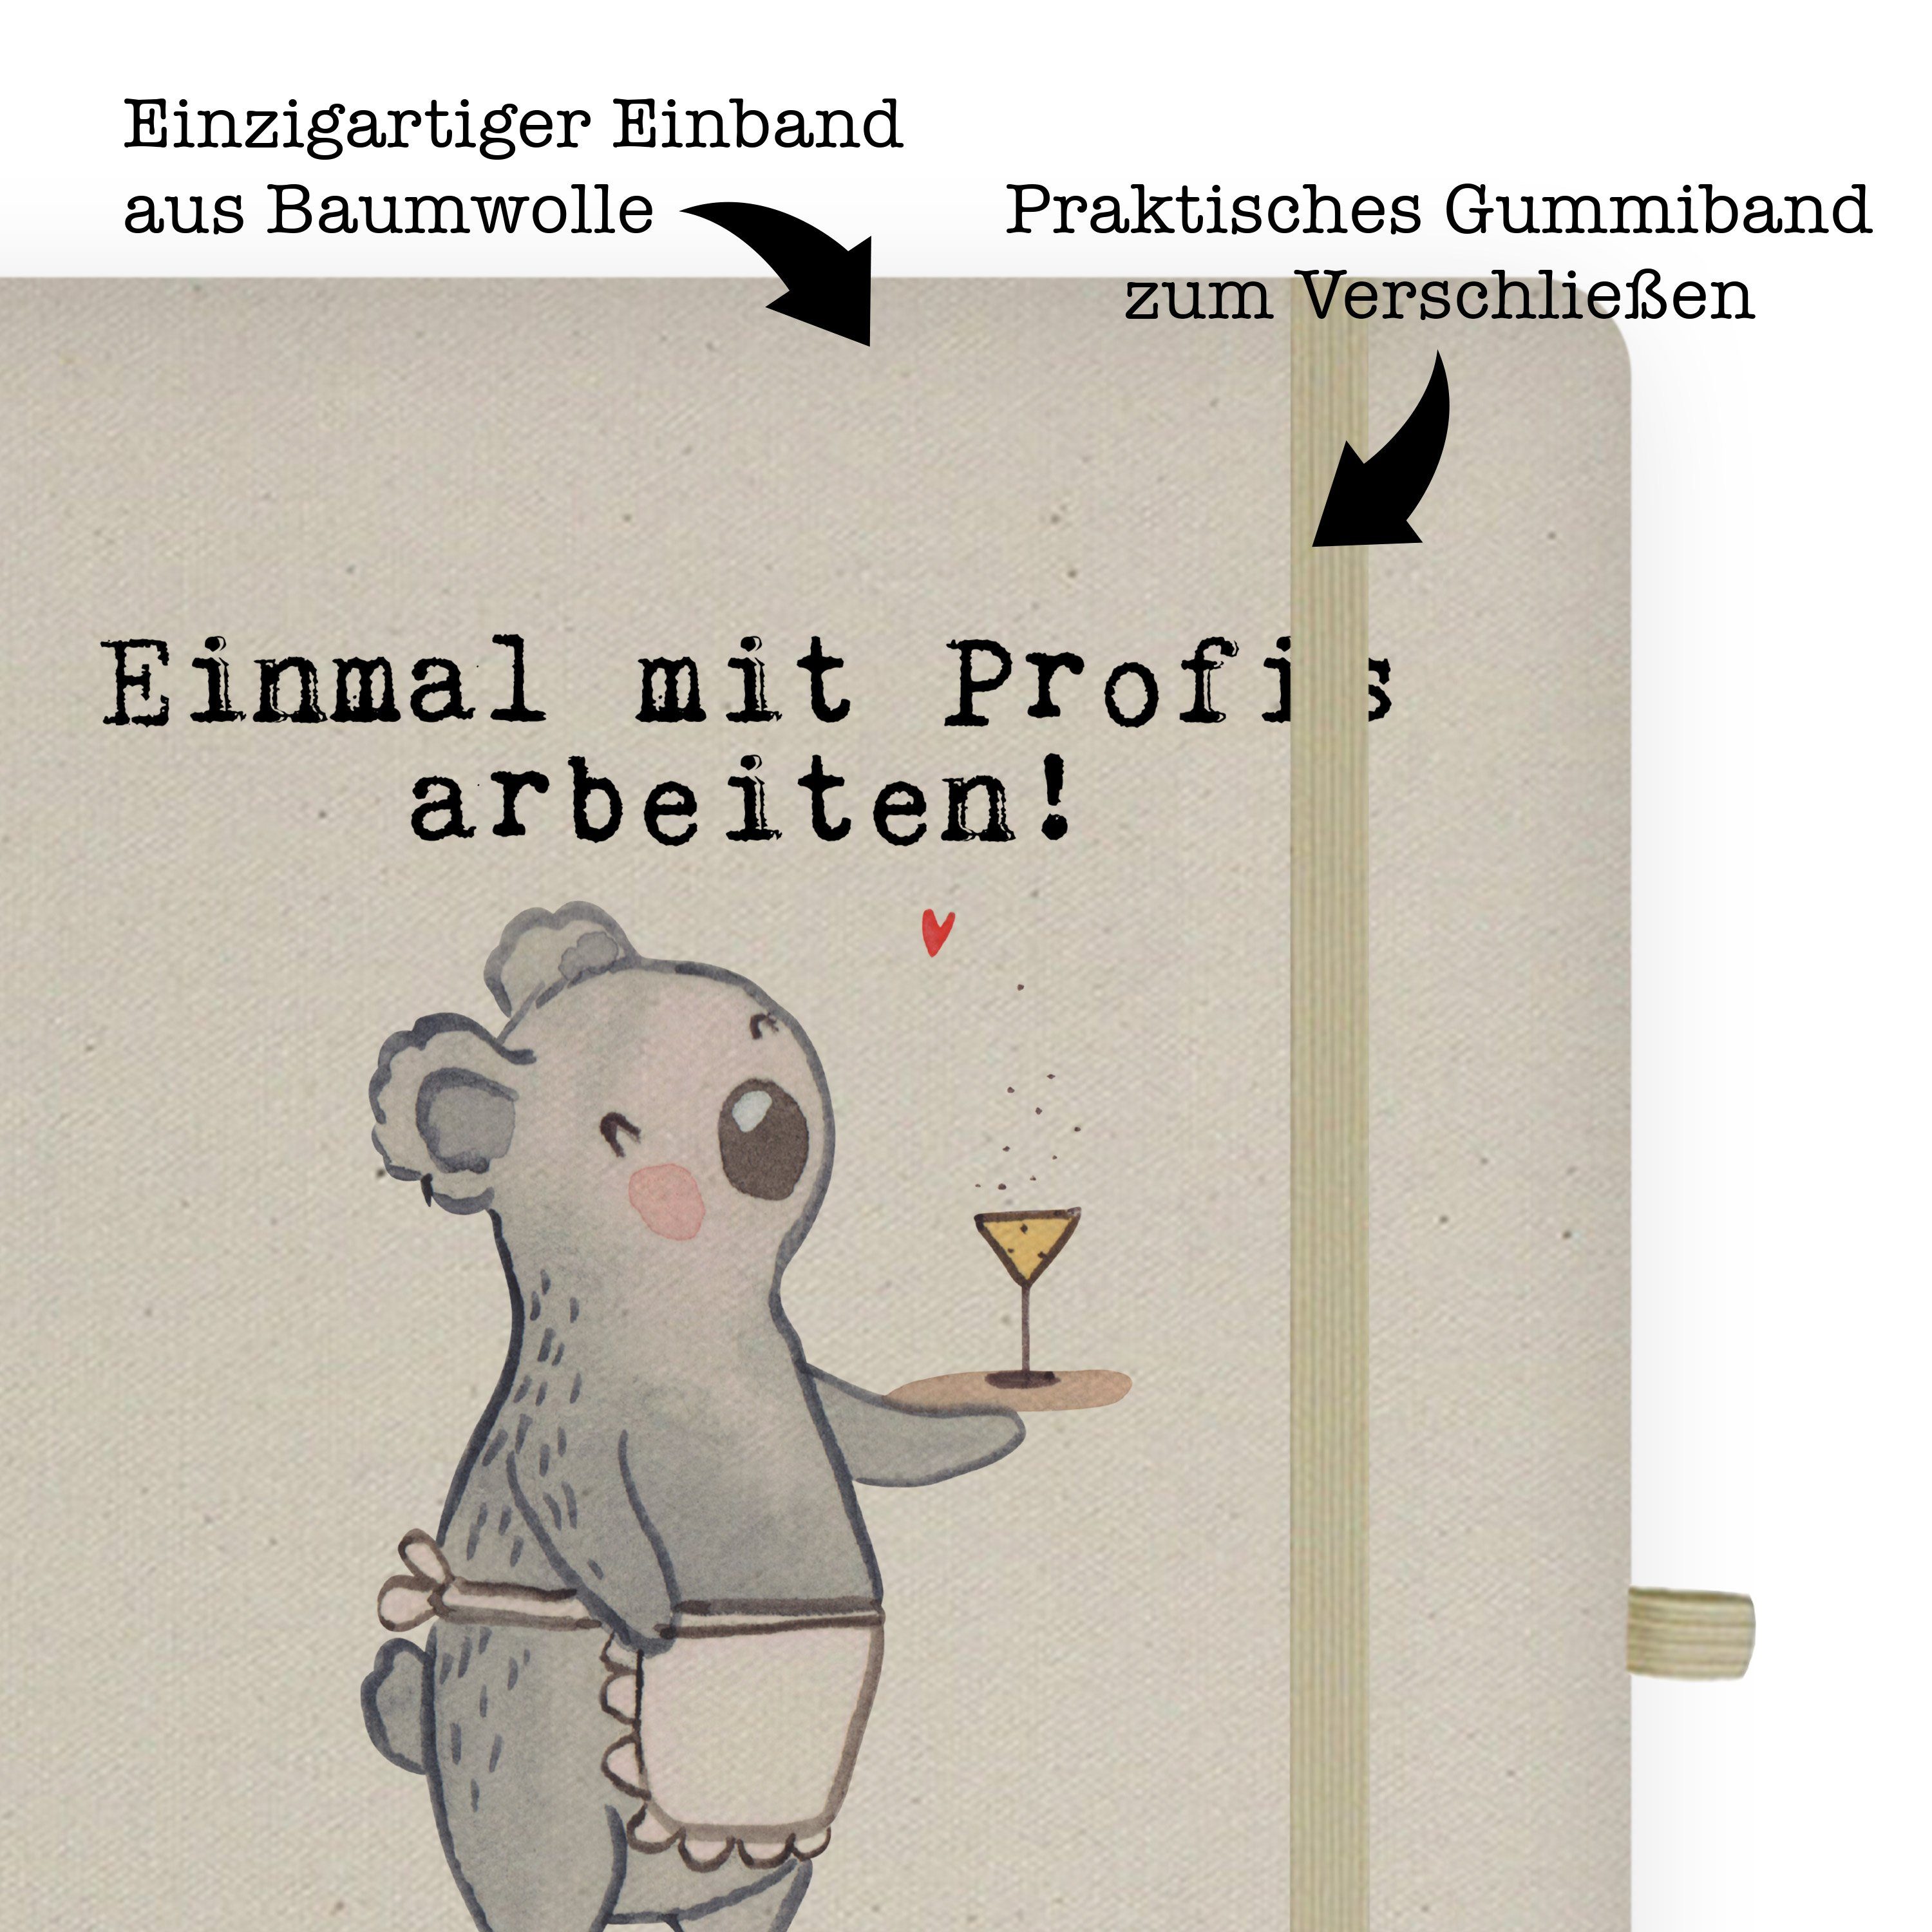 Geschenk, Transparent Notizbuch Panda & Mrs. Kellnerin Panda - Eint & Mr. Mr. Leidenschaft - Ausbildung, aus Mrs.